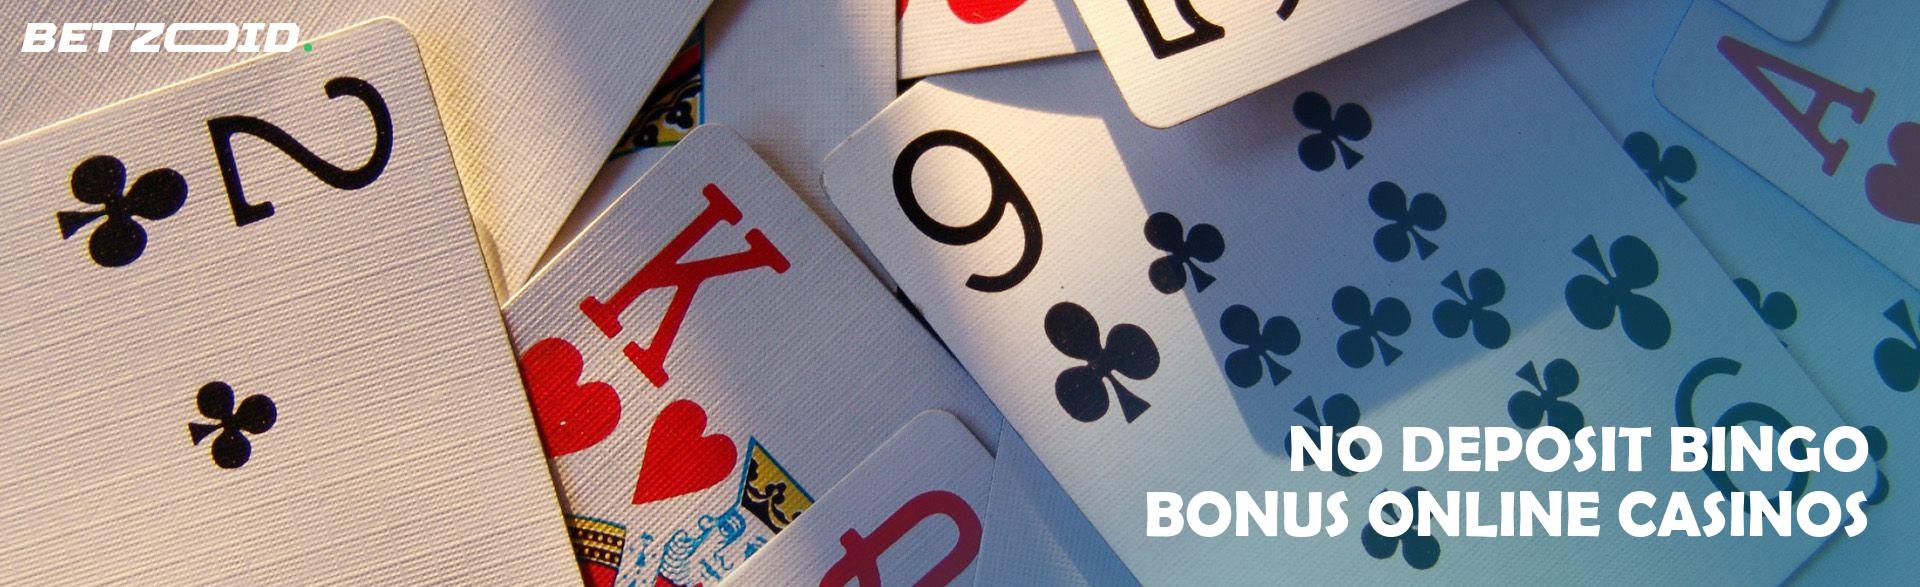 No Deposit Bingo Bonus Online Casinos.